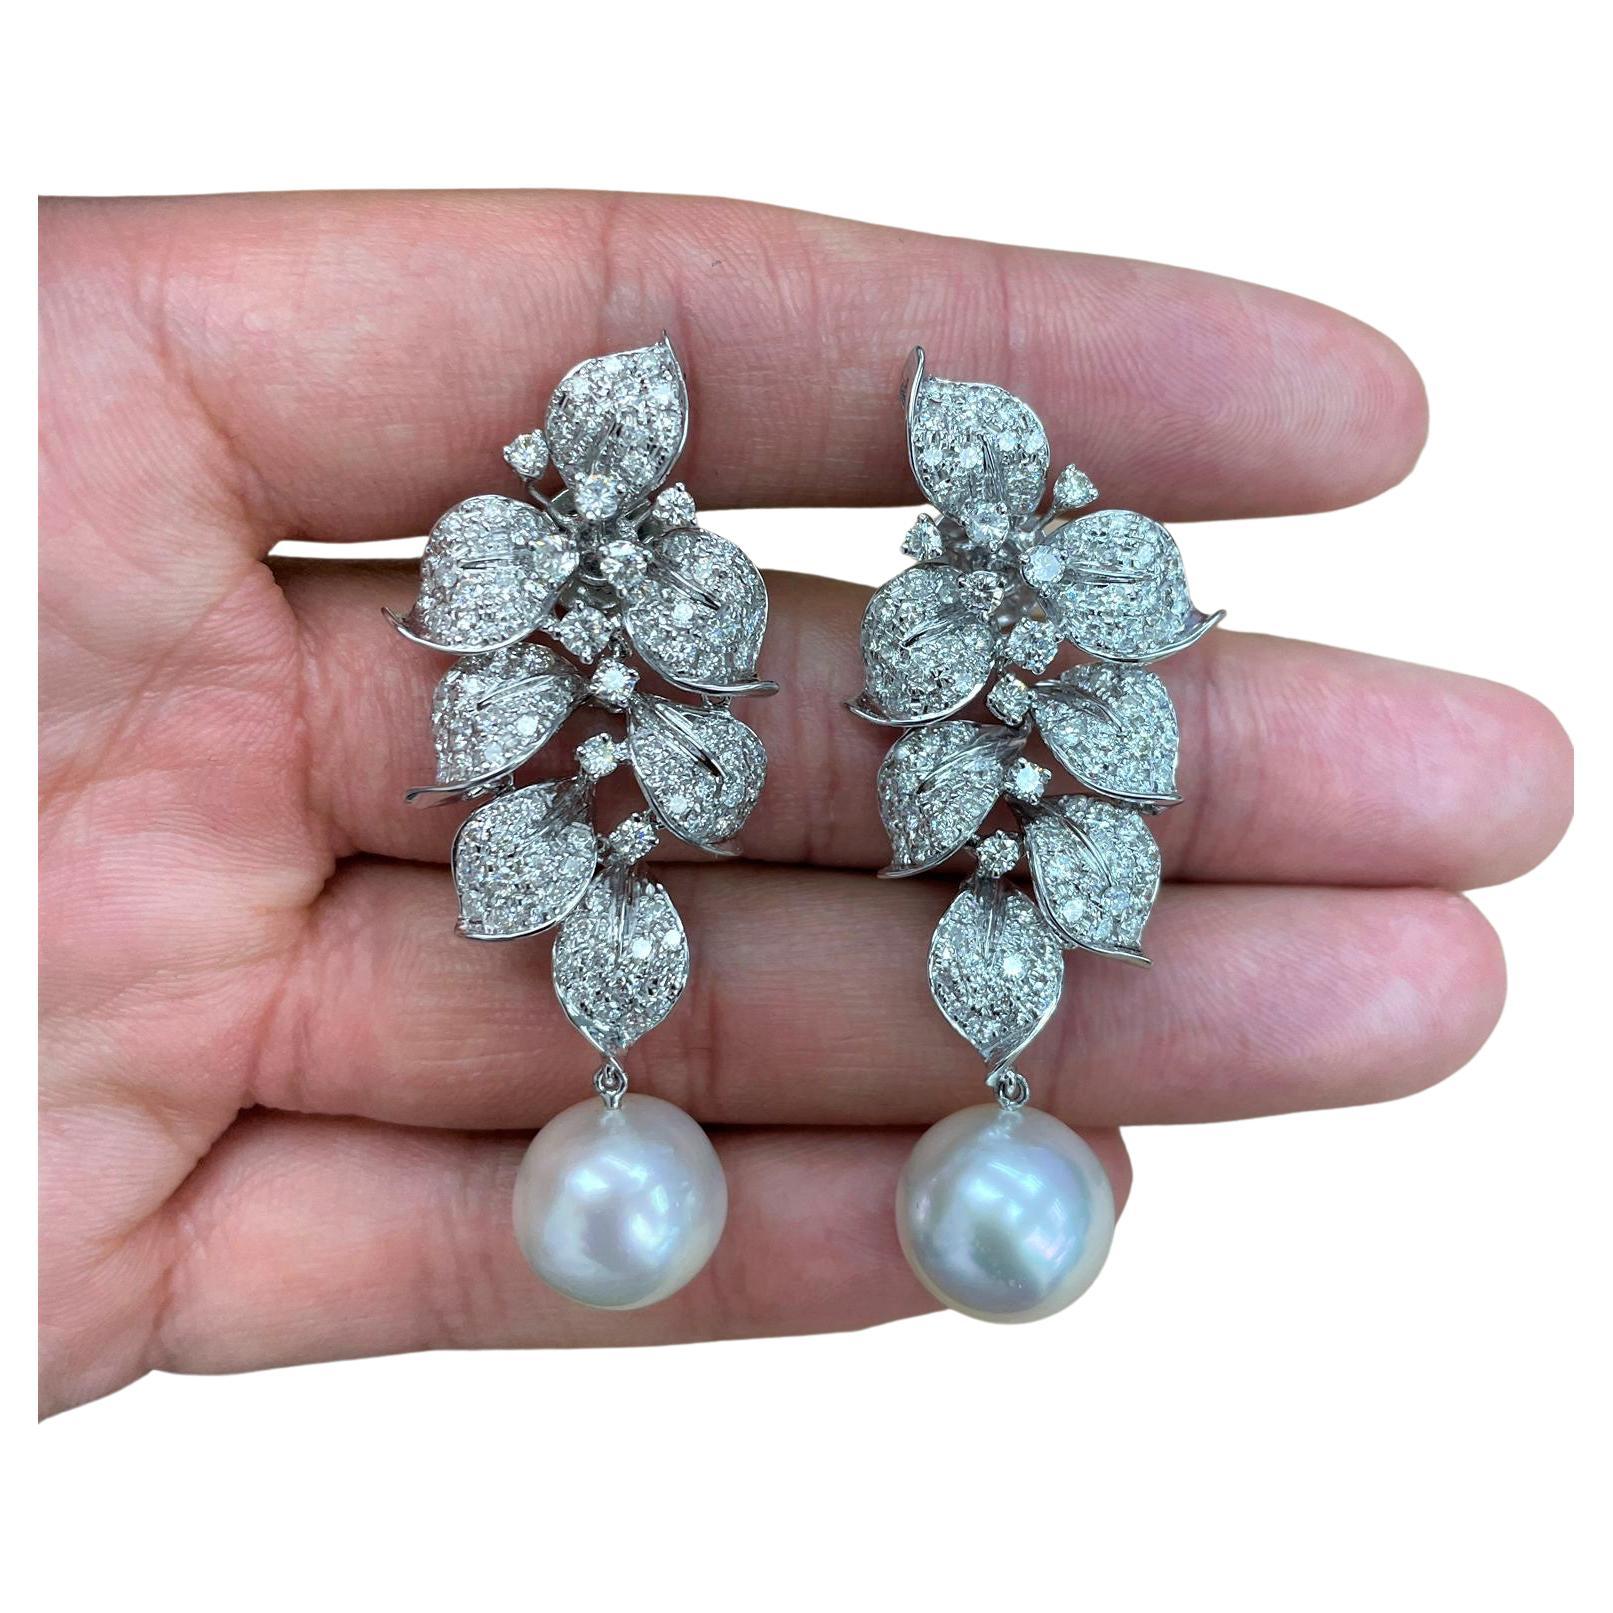 NWT $21, 500 Important 18KT Gold Fancy South Sea Large Pearl Diamond Earrings